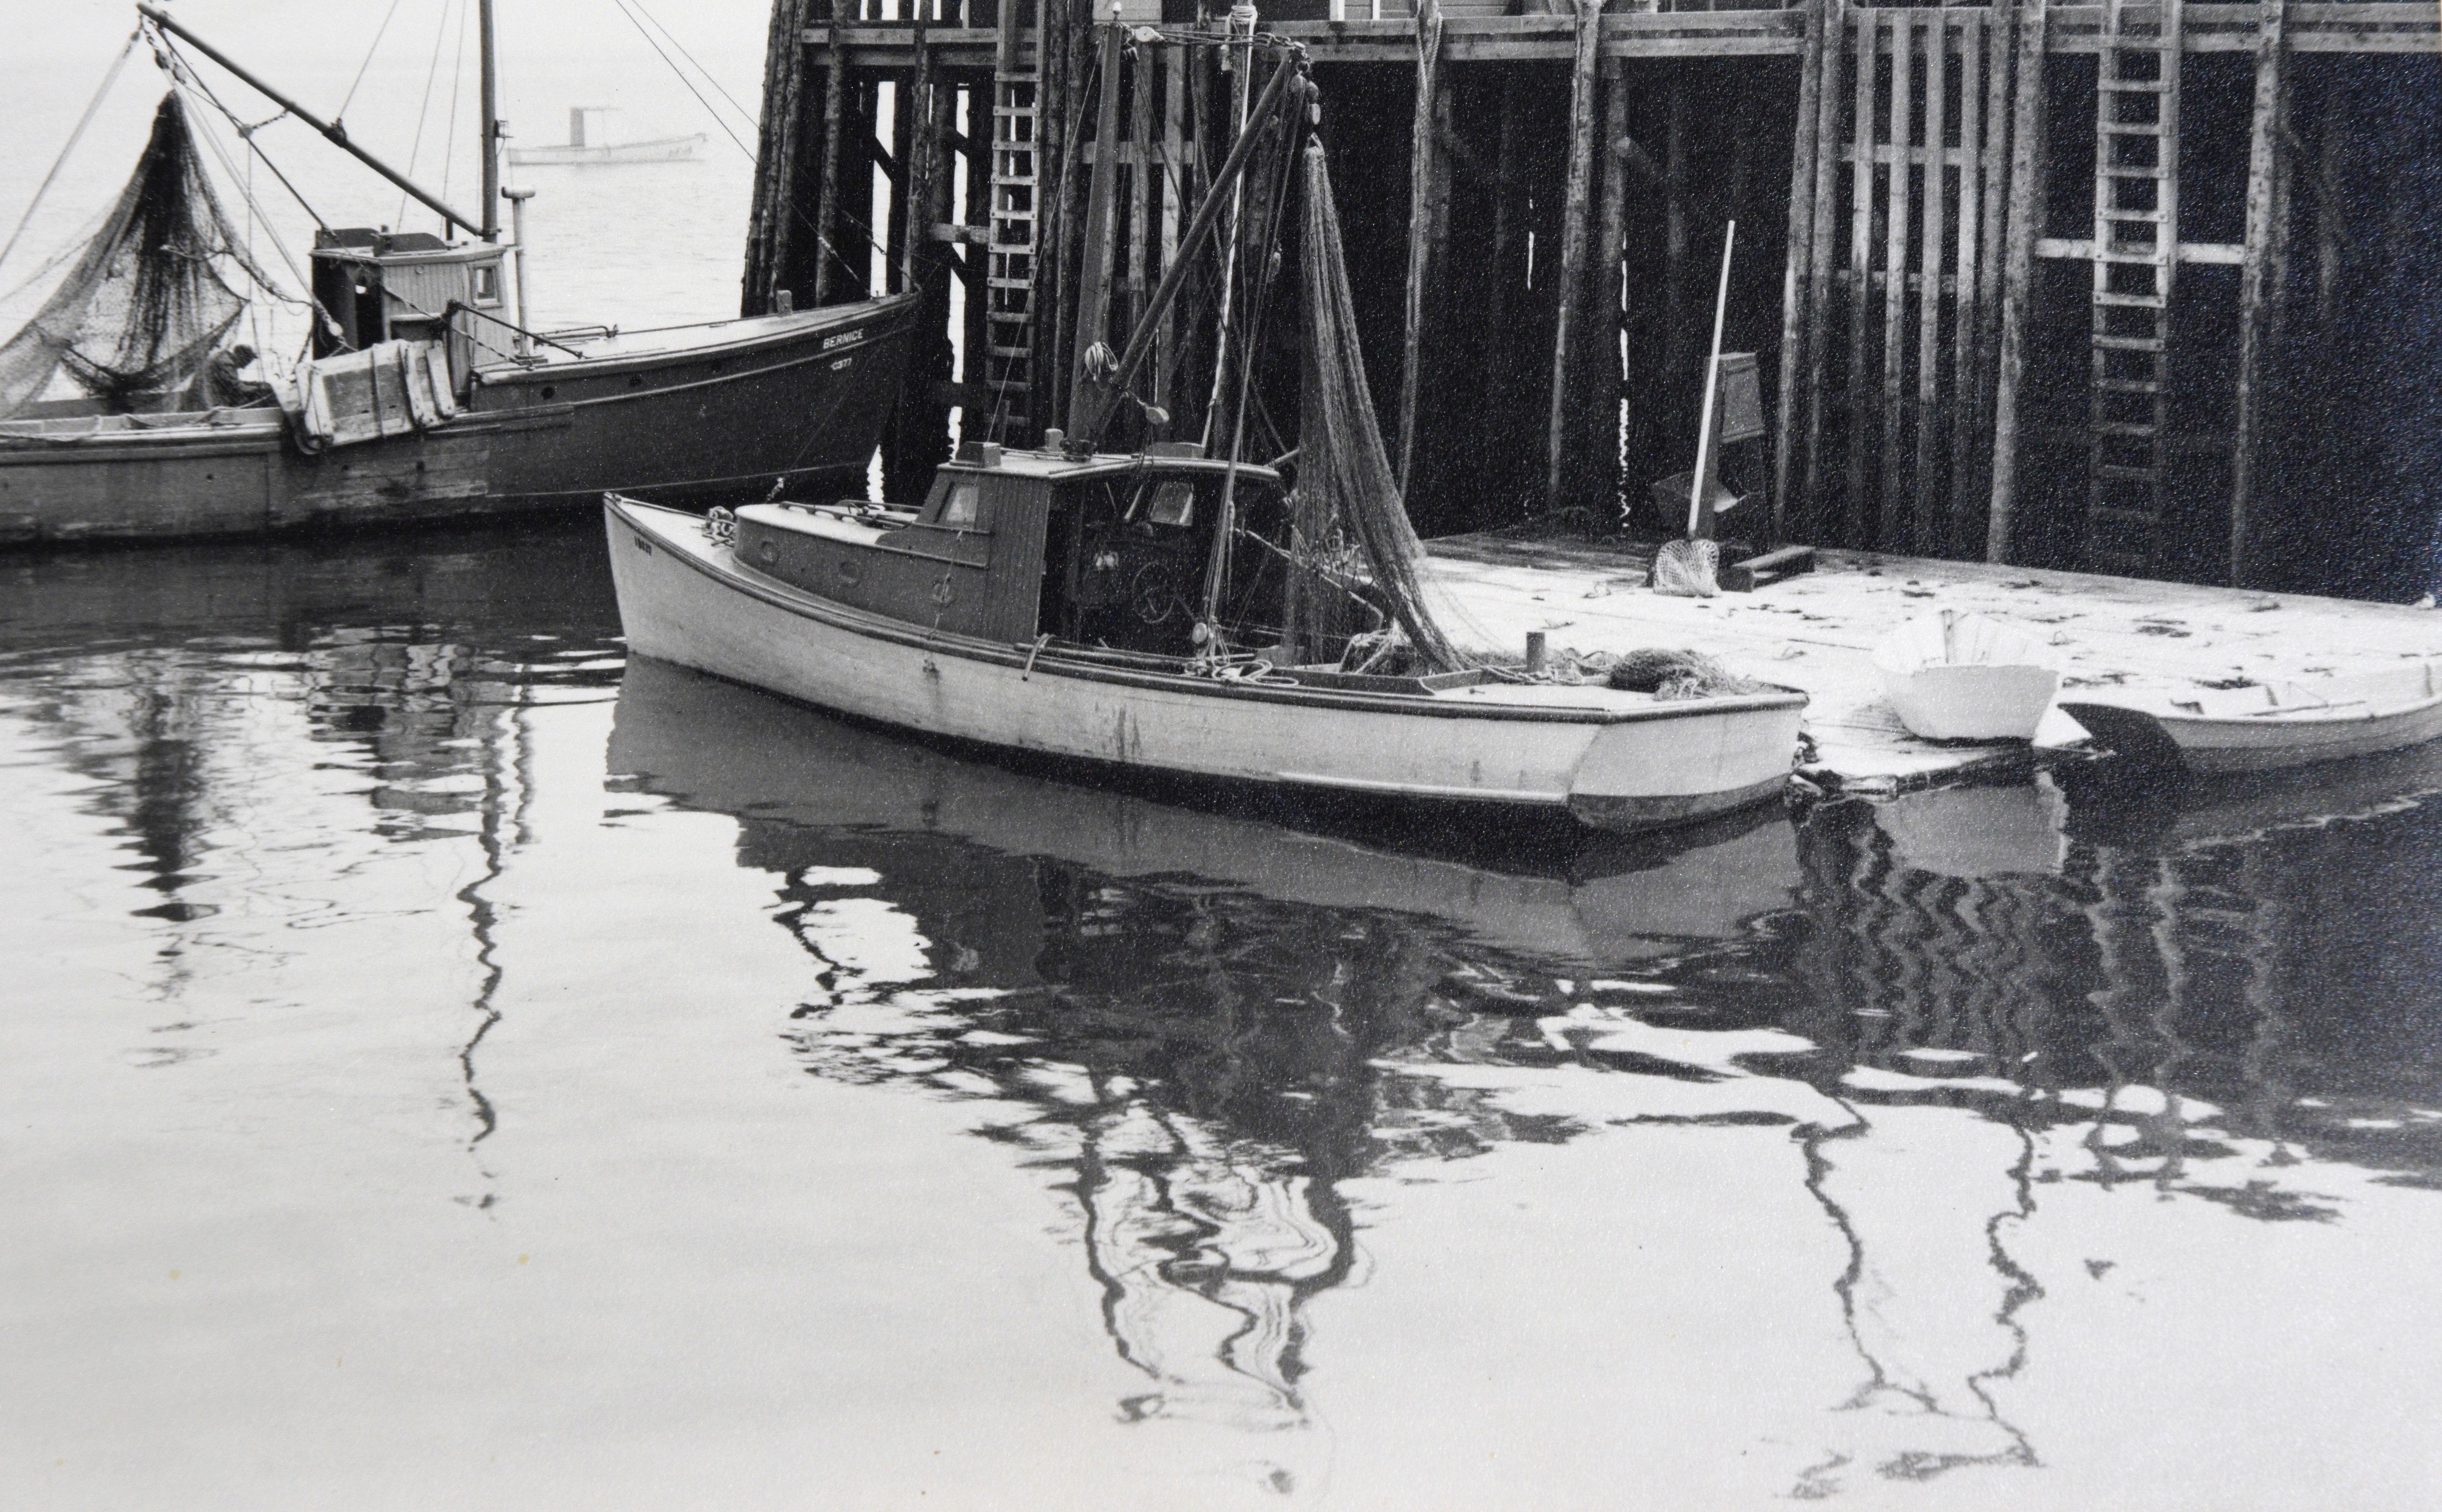 Manset Fish Wharf - American Realist Photograph by Willis H Ballard